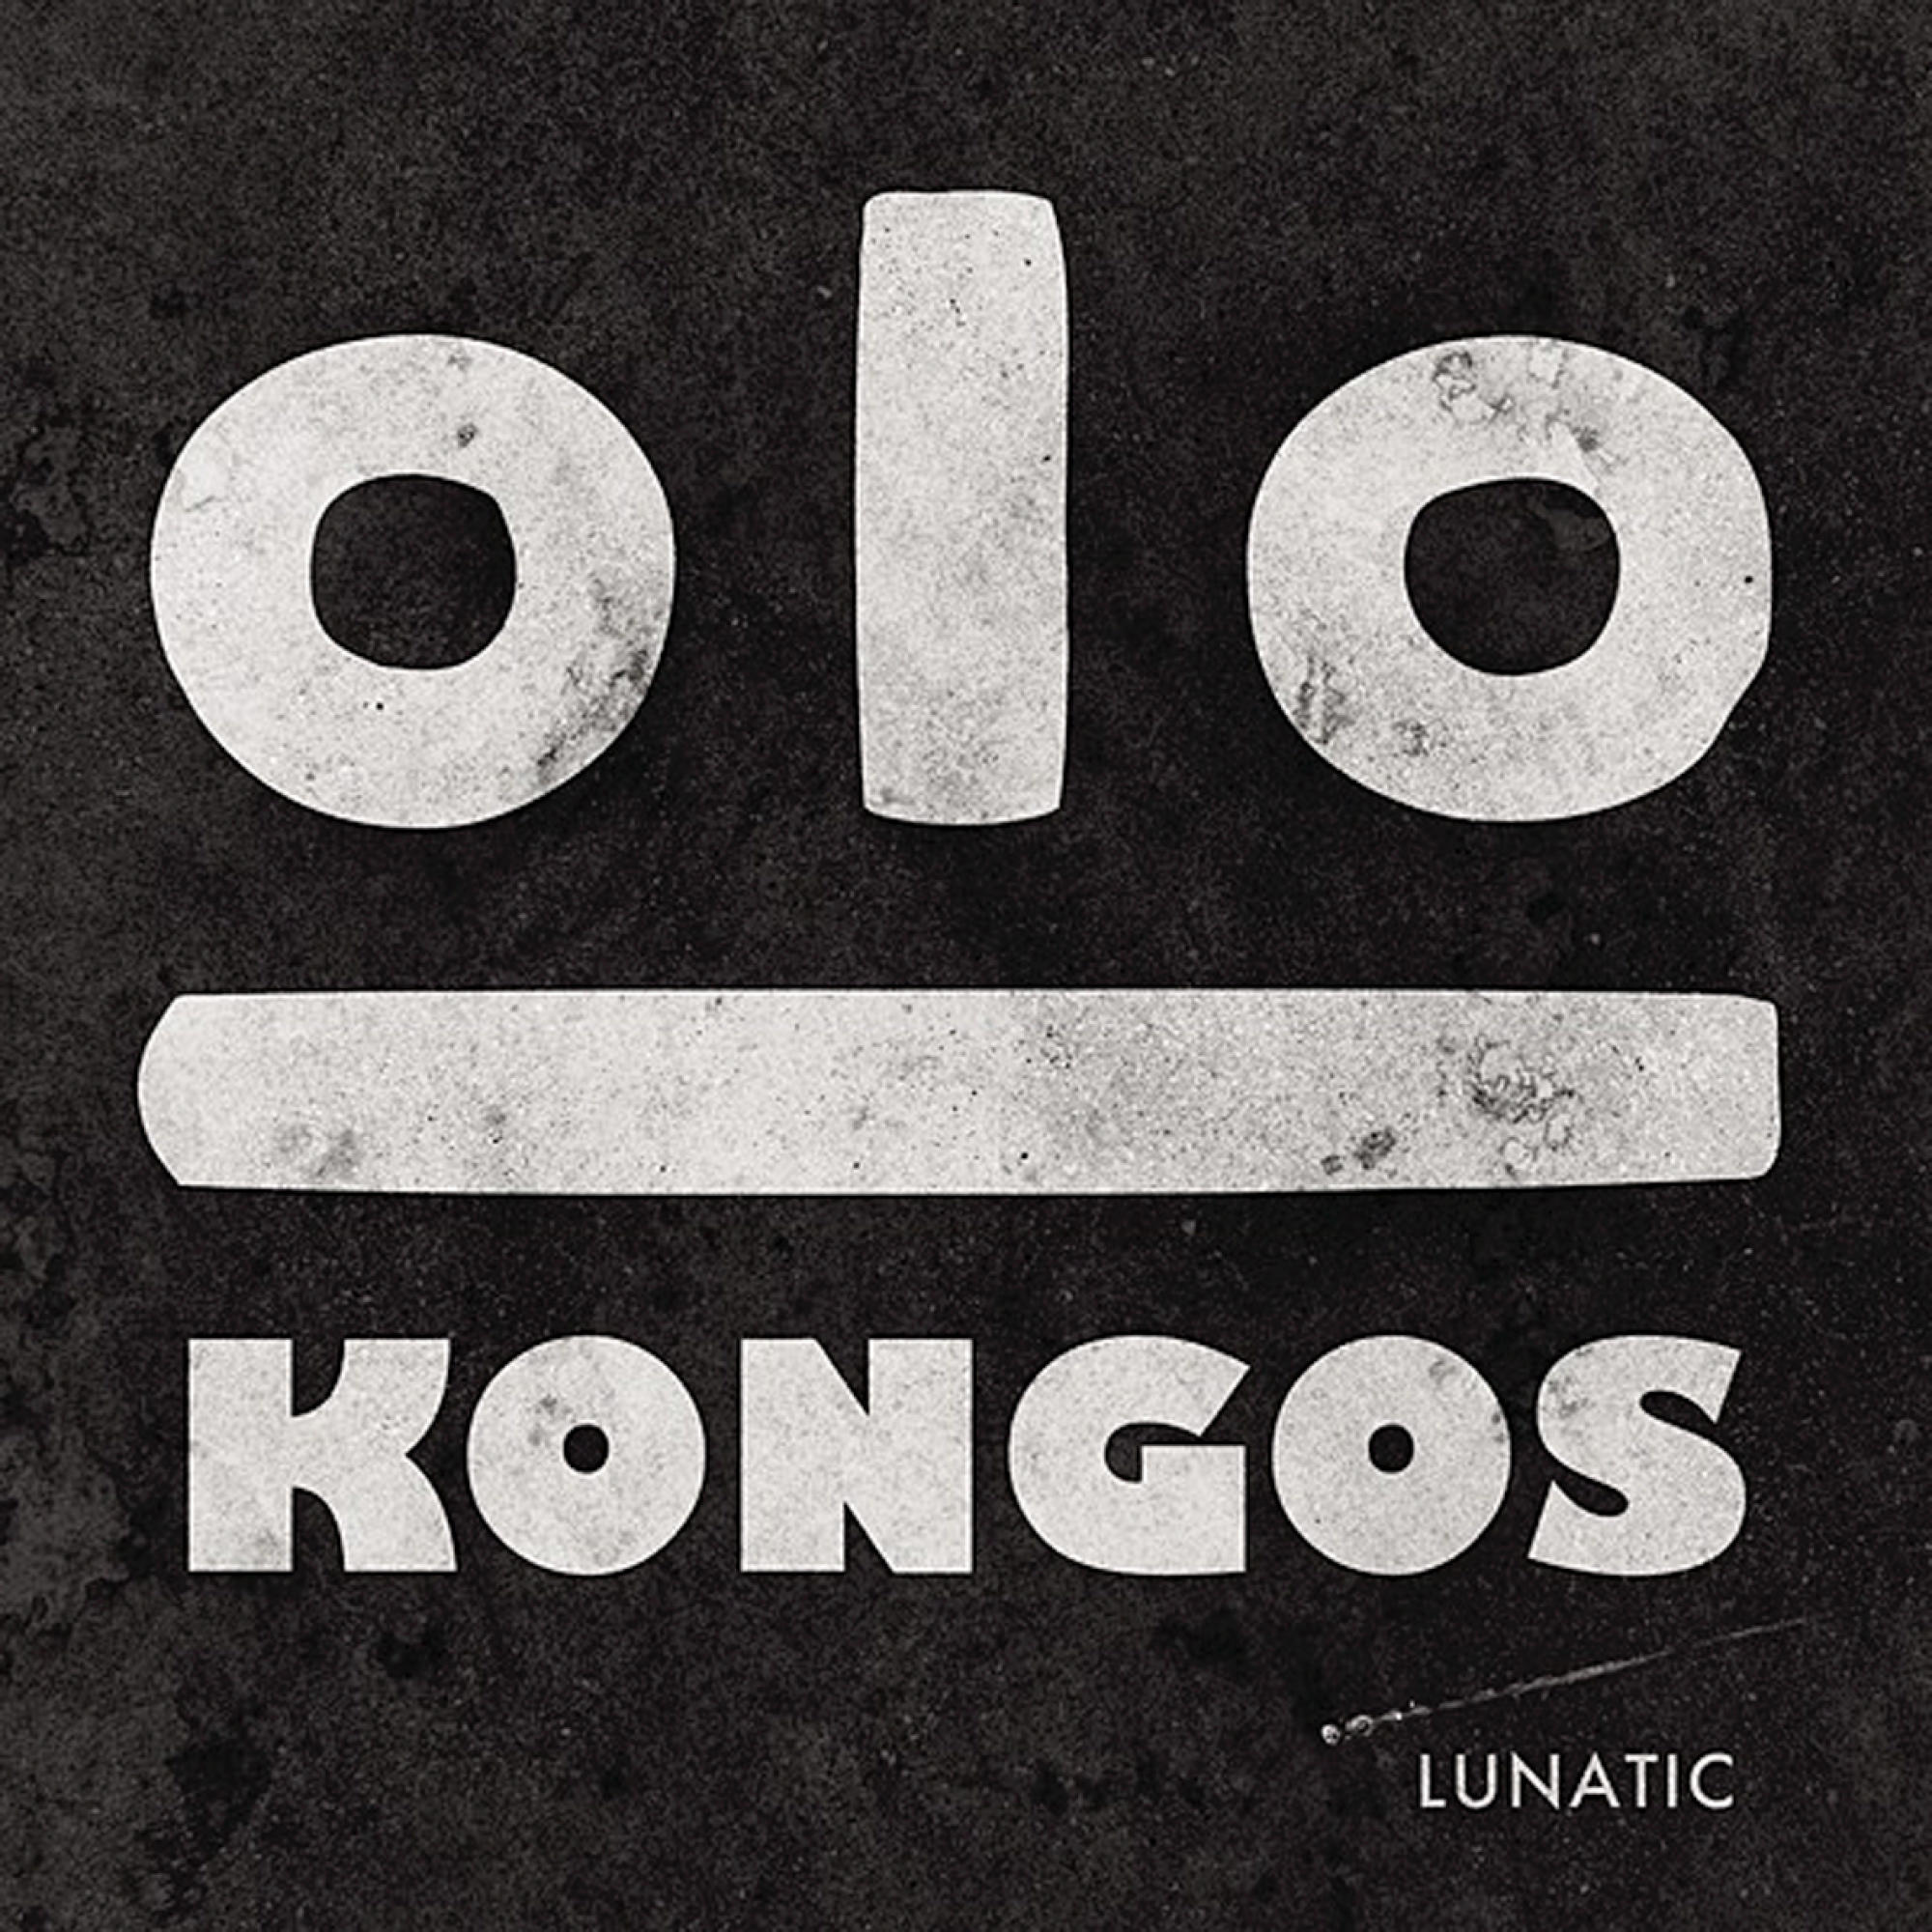 Kongos - - Lunatic (CD)